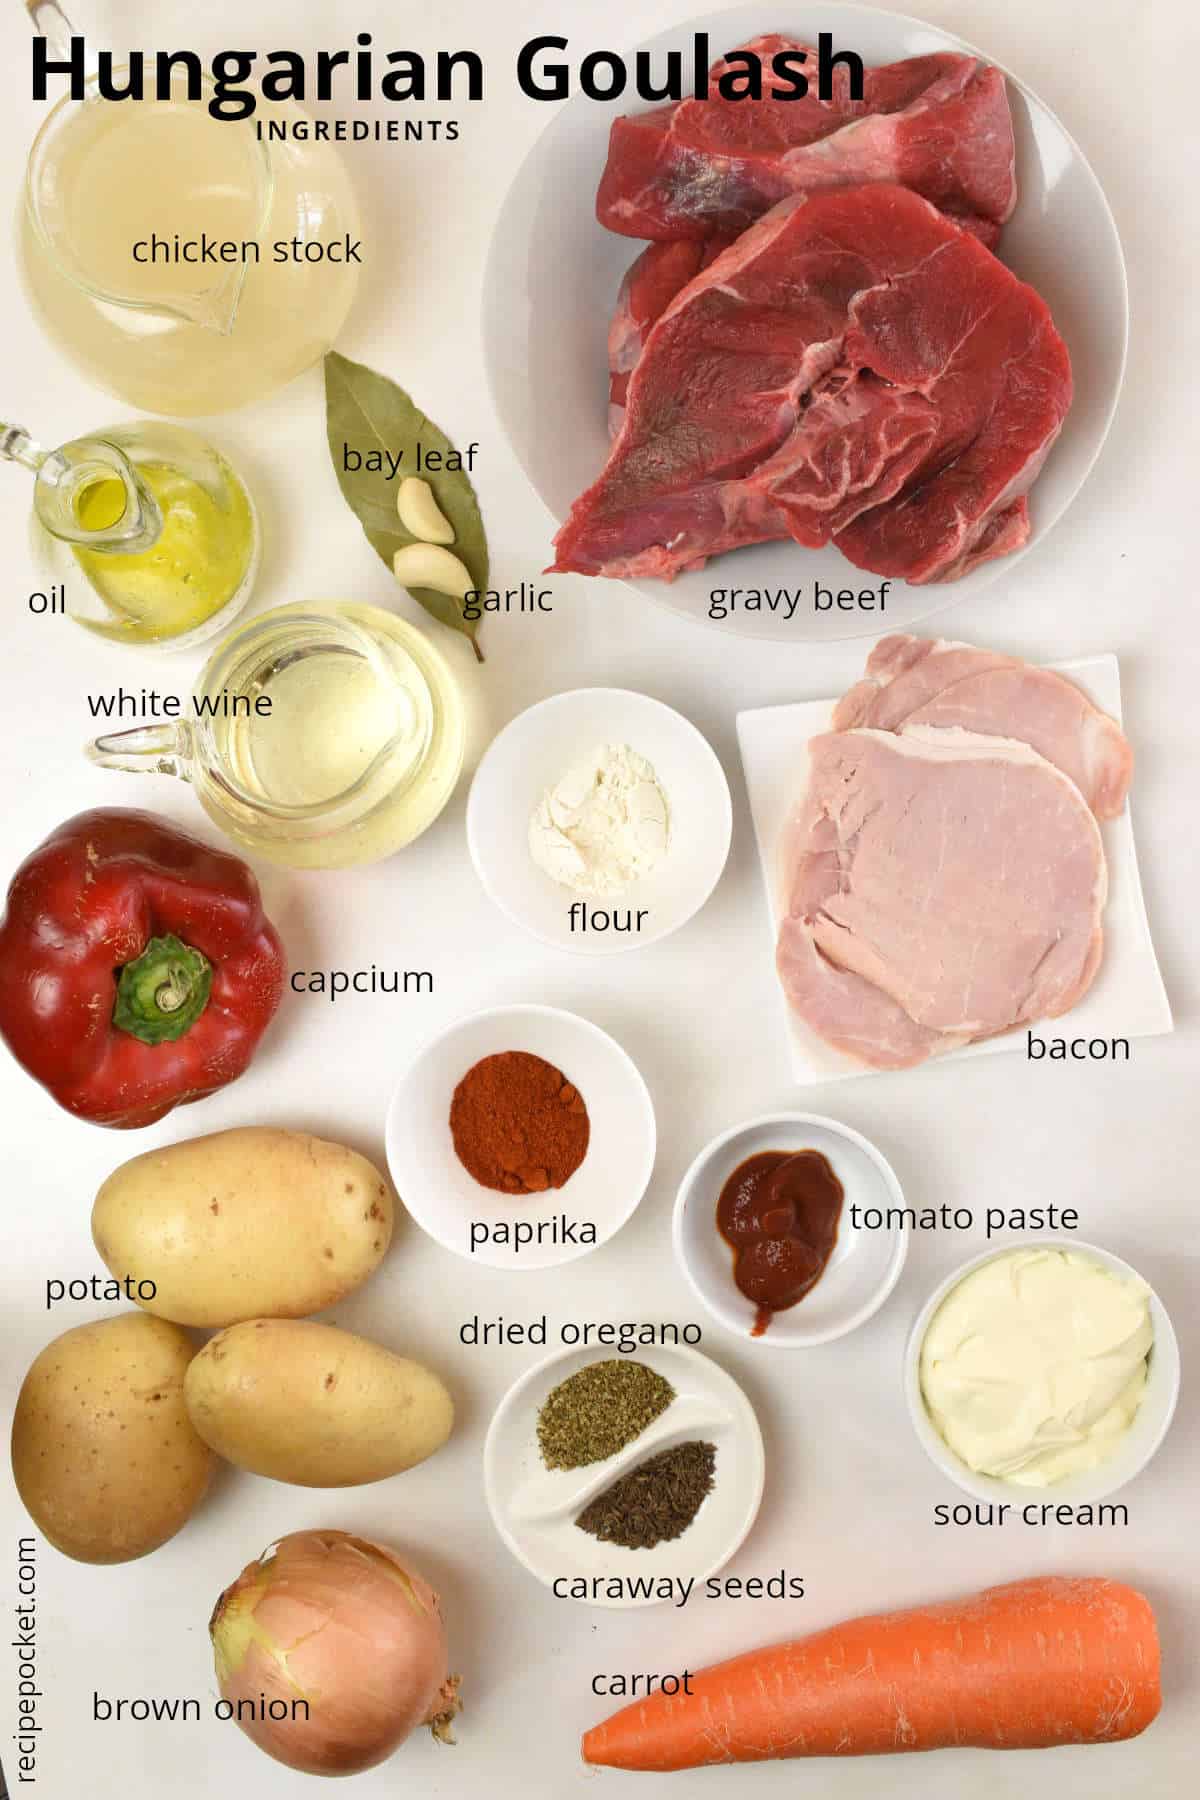 Ingredients image for this Hungarian goulash recipe.